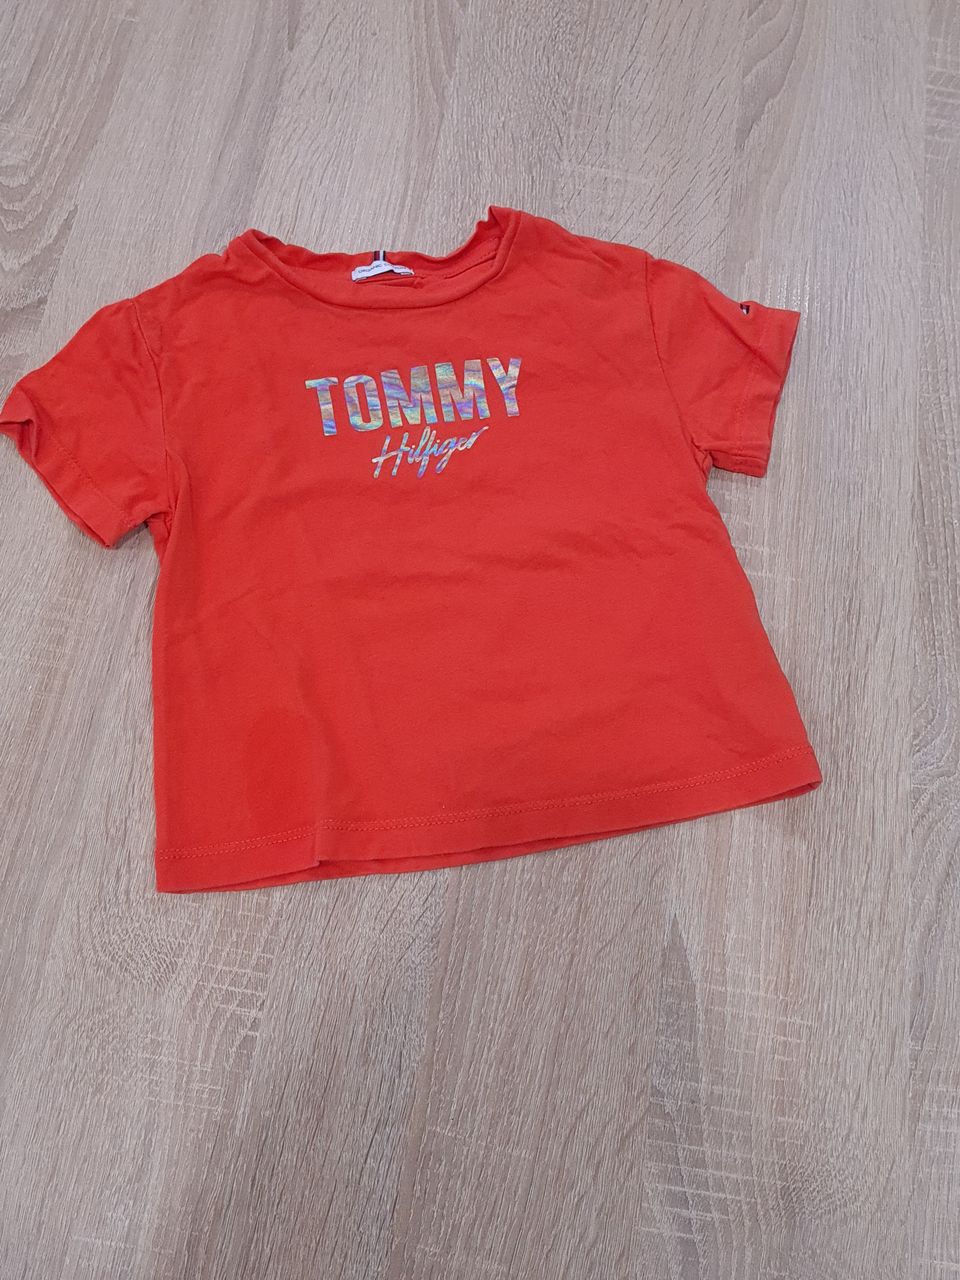 Tommy Hilfiger t-paita 98